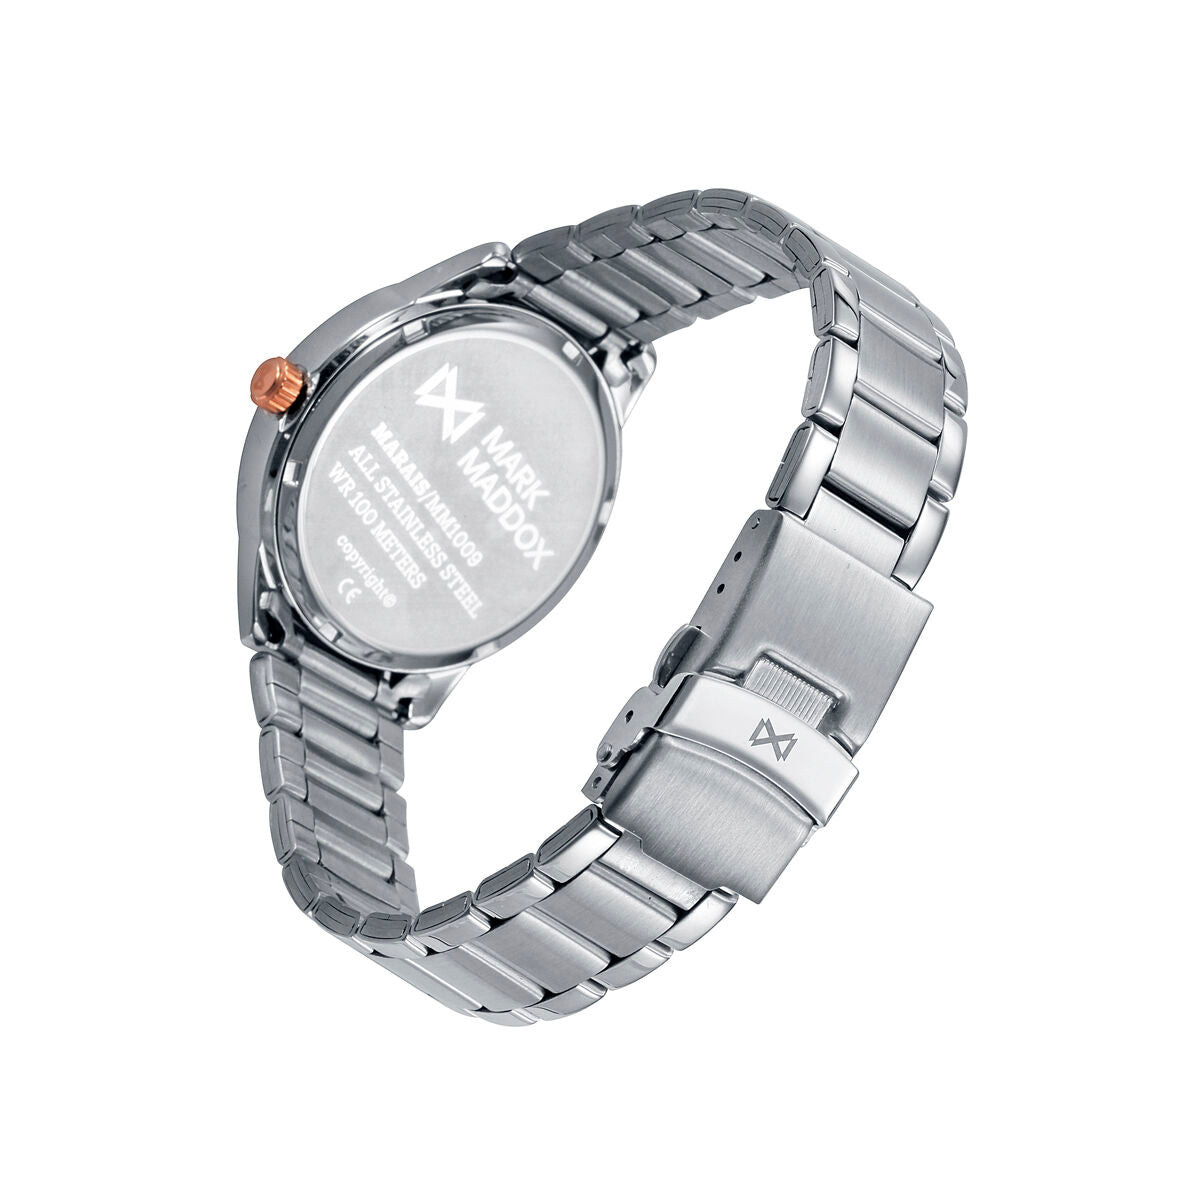 Horloge Dames Mark Maddox MM1009-43 (Ø 38 mm)